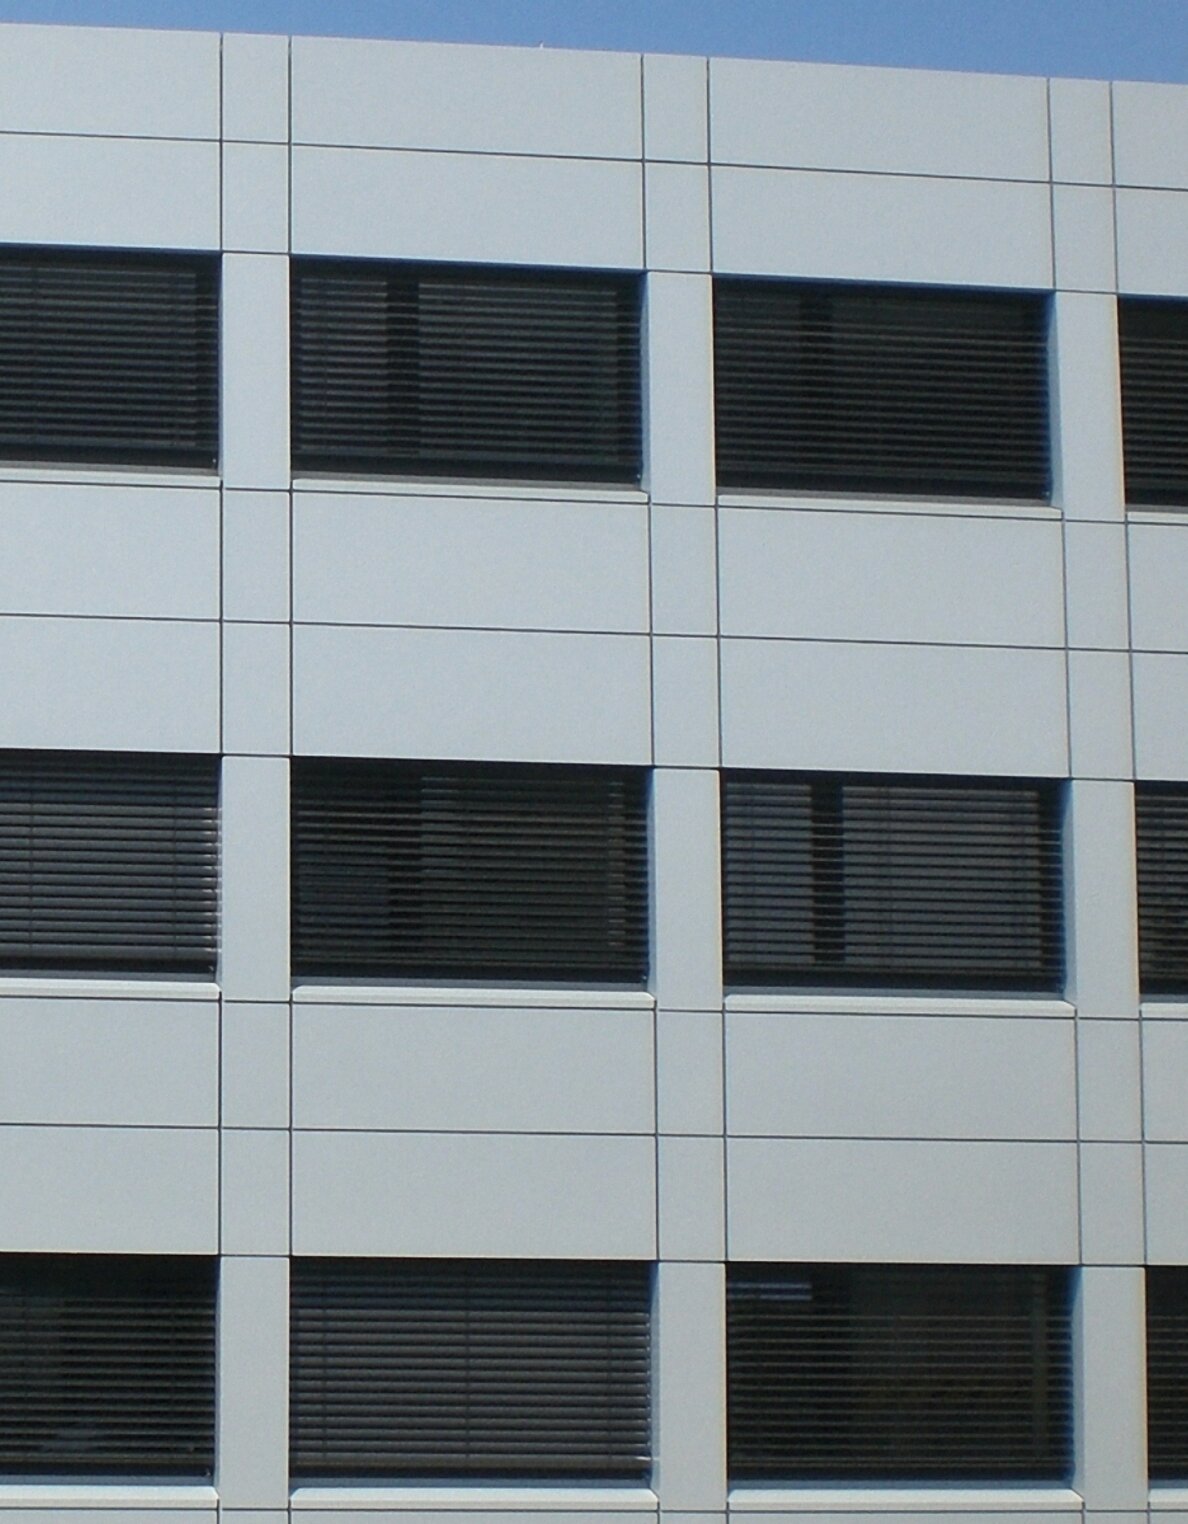 "WMV GmbH & Co. KG" aluminium- & weathering steel facade, Germany